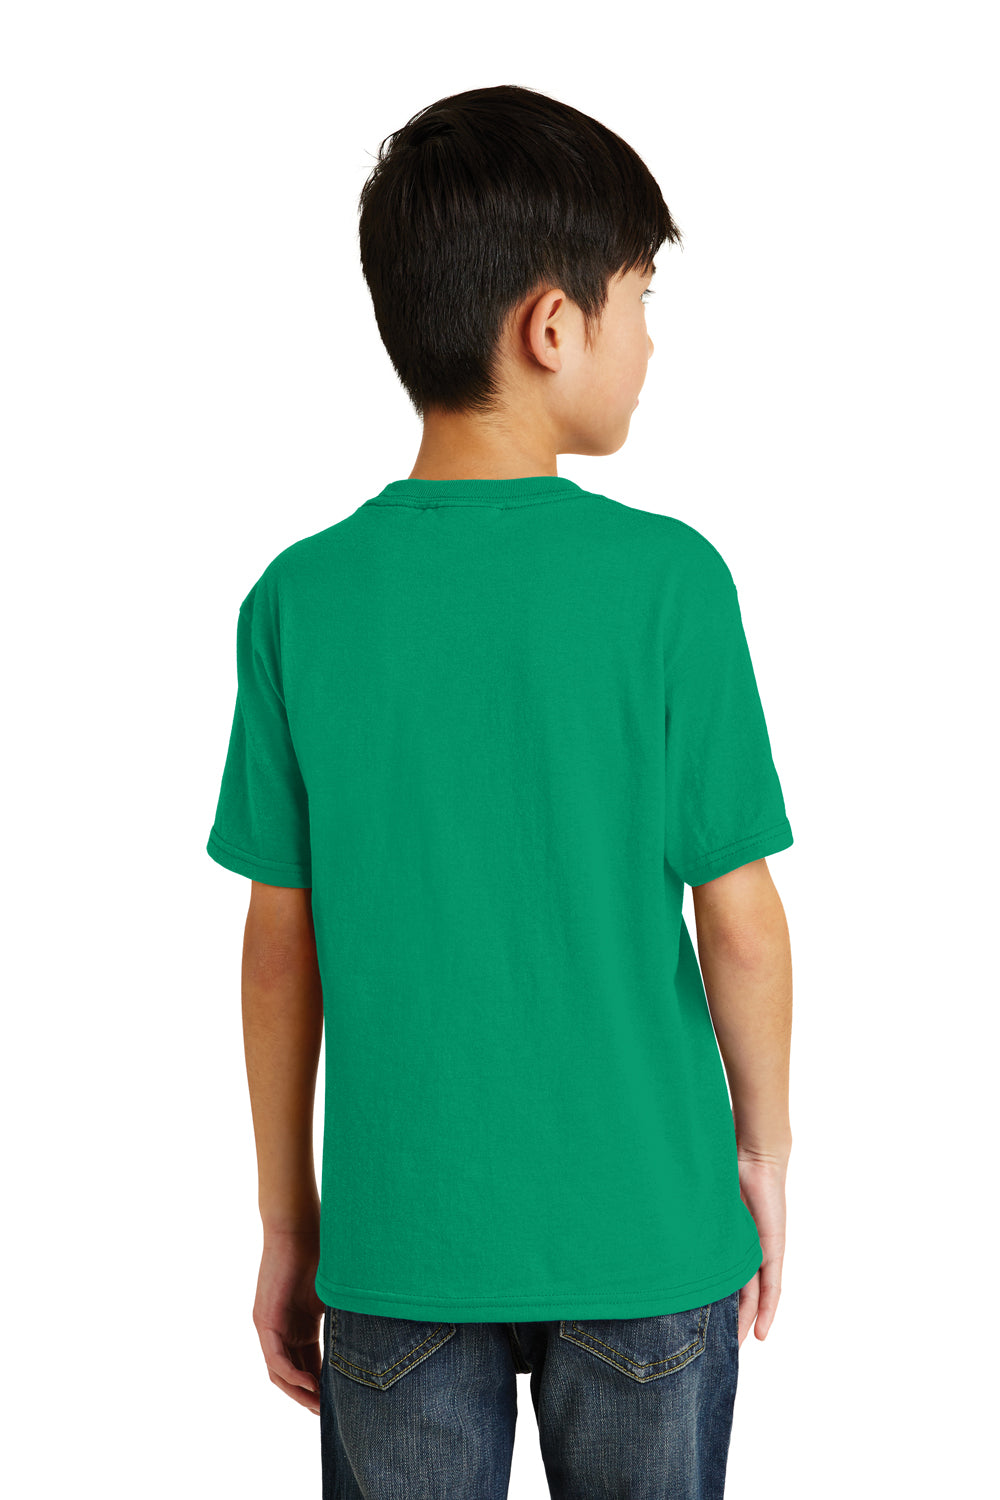 Port & Company PC55Y Youth Core Short Sleeve Crewneck T-Shirt Kelly Green Back